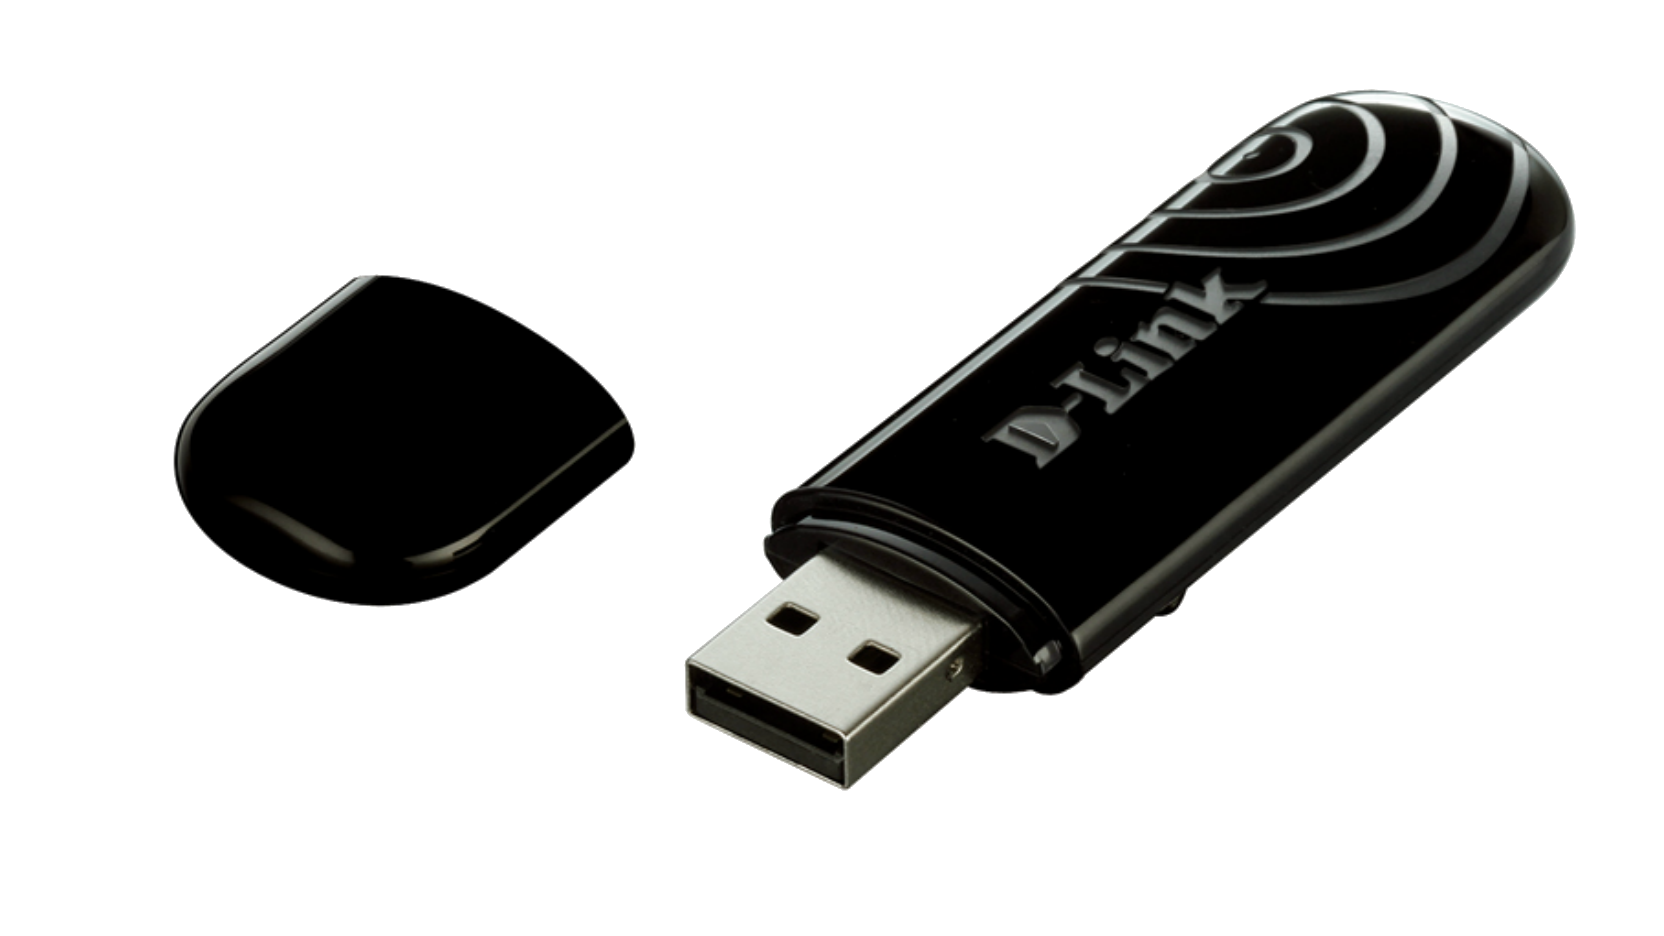 DWA-160 XTREME N DUAL BAND USB ADAPTER DRIVER UPDATE